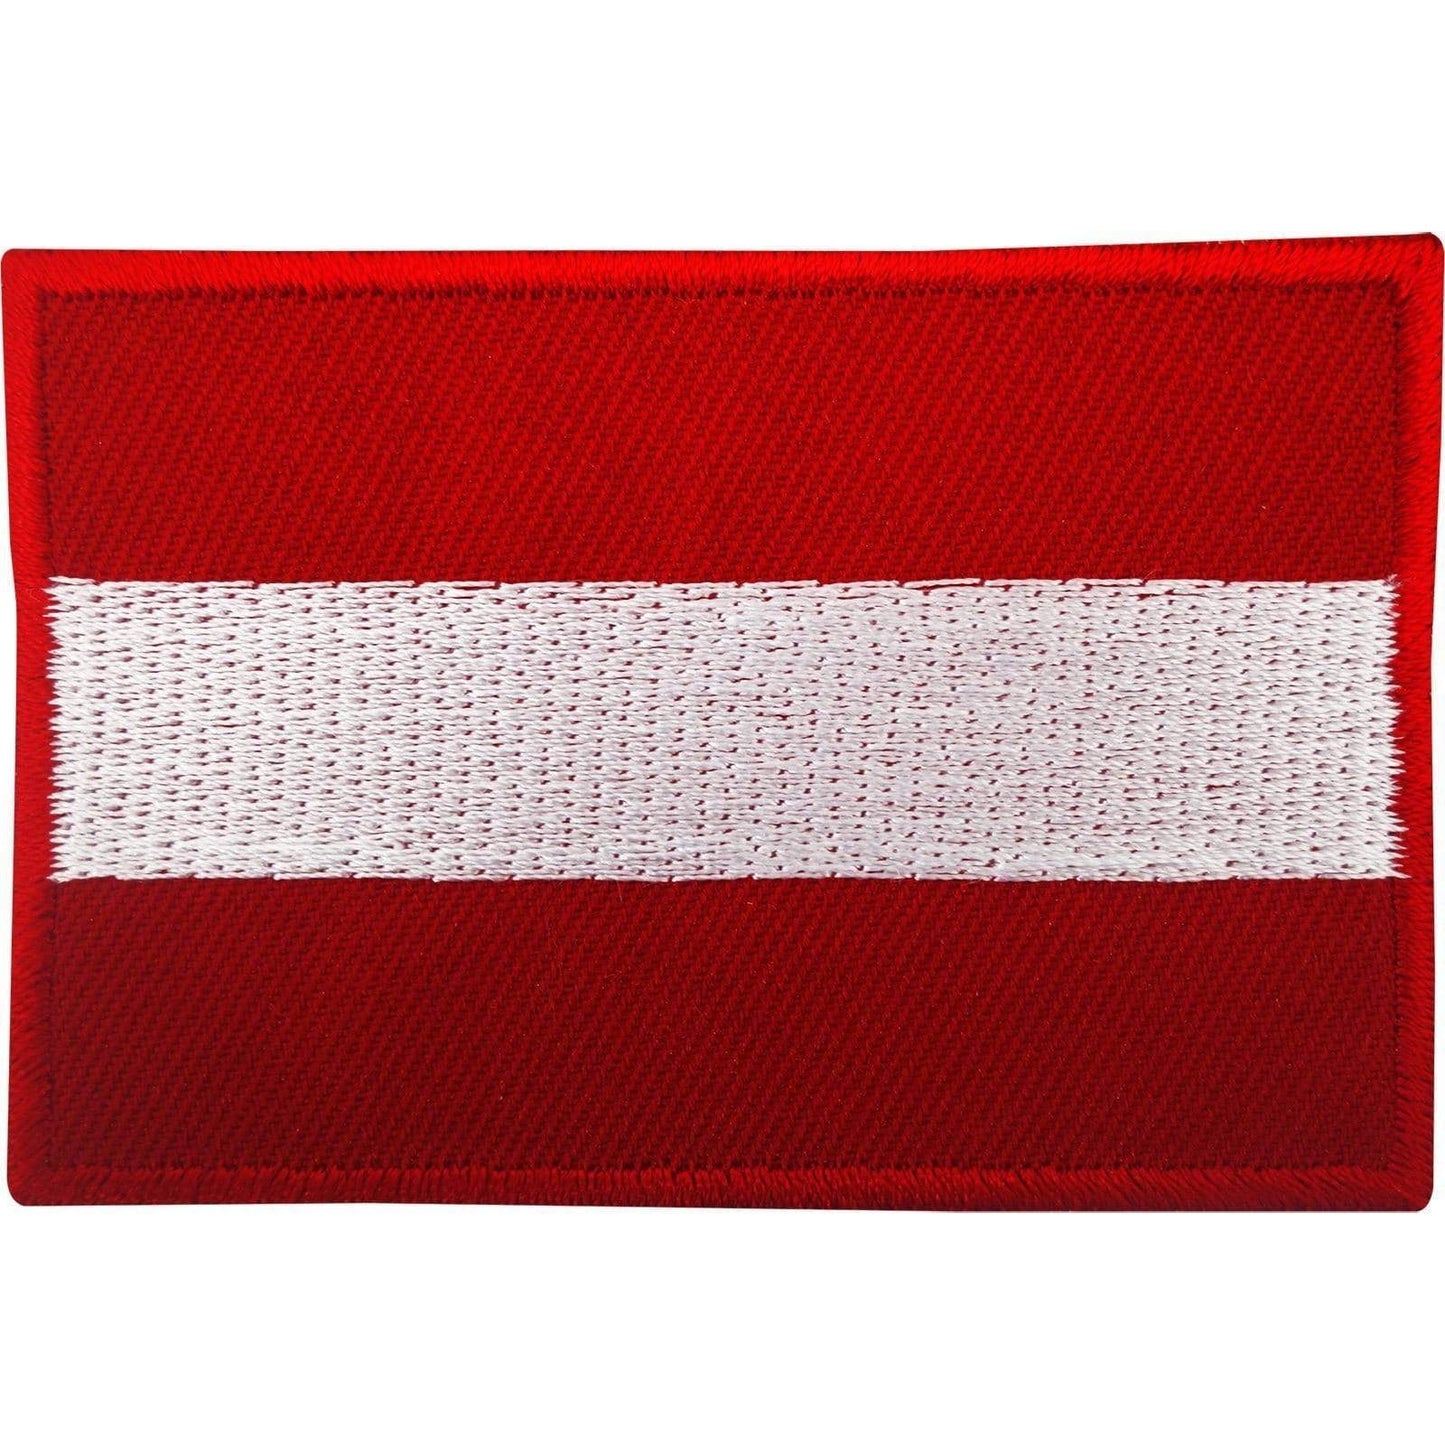 Austria Flag Patch Iron On Badge Sew On Austrian Flag Embroidered Applique Motif